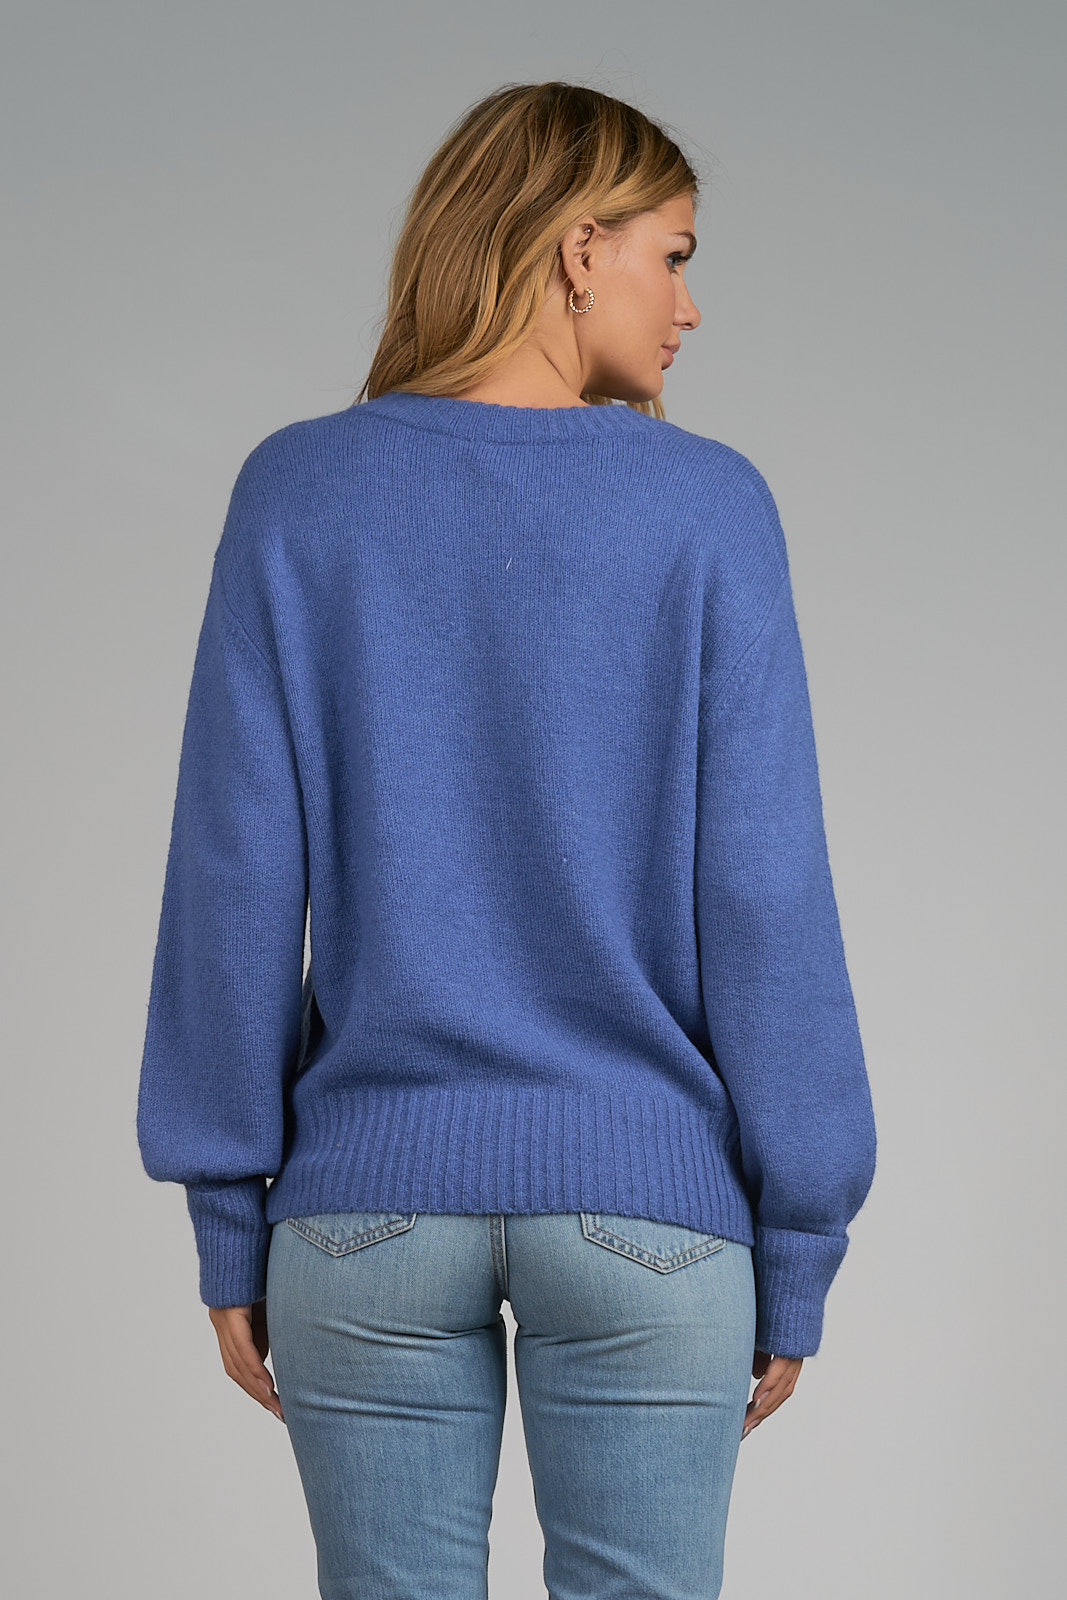 Elan Long Sleeve V-Neck Sweater